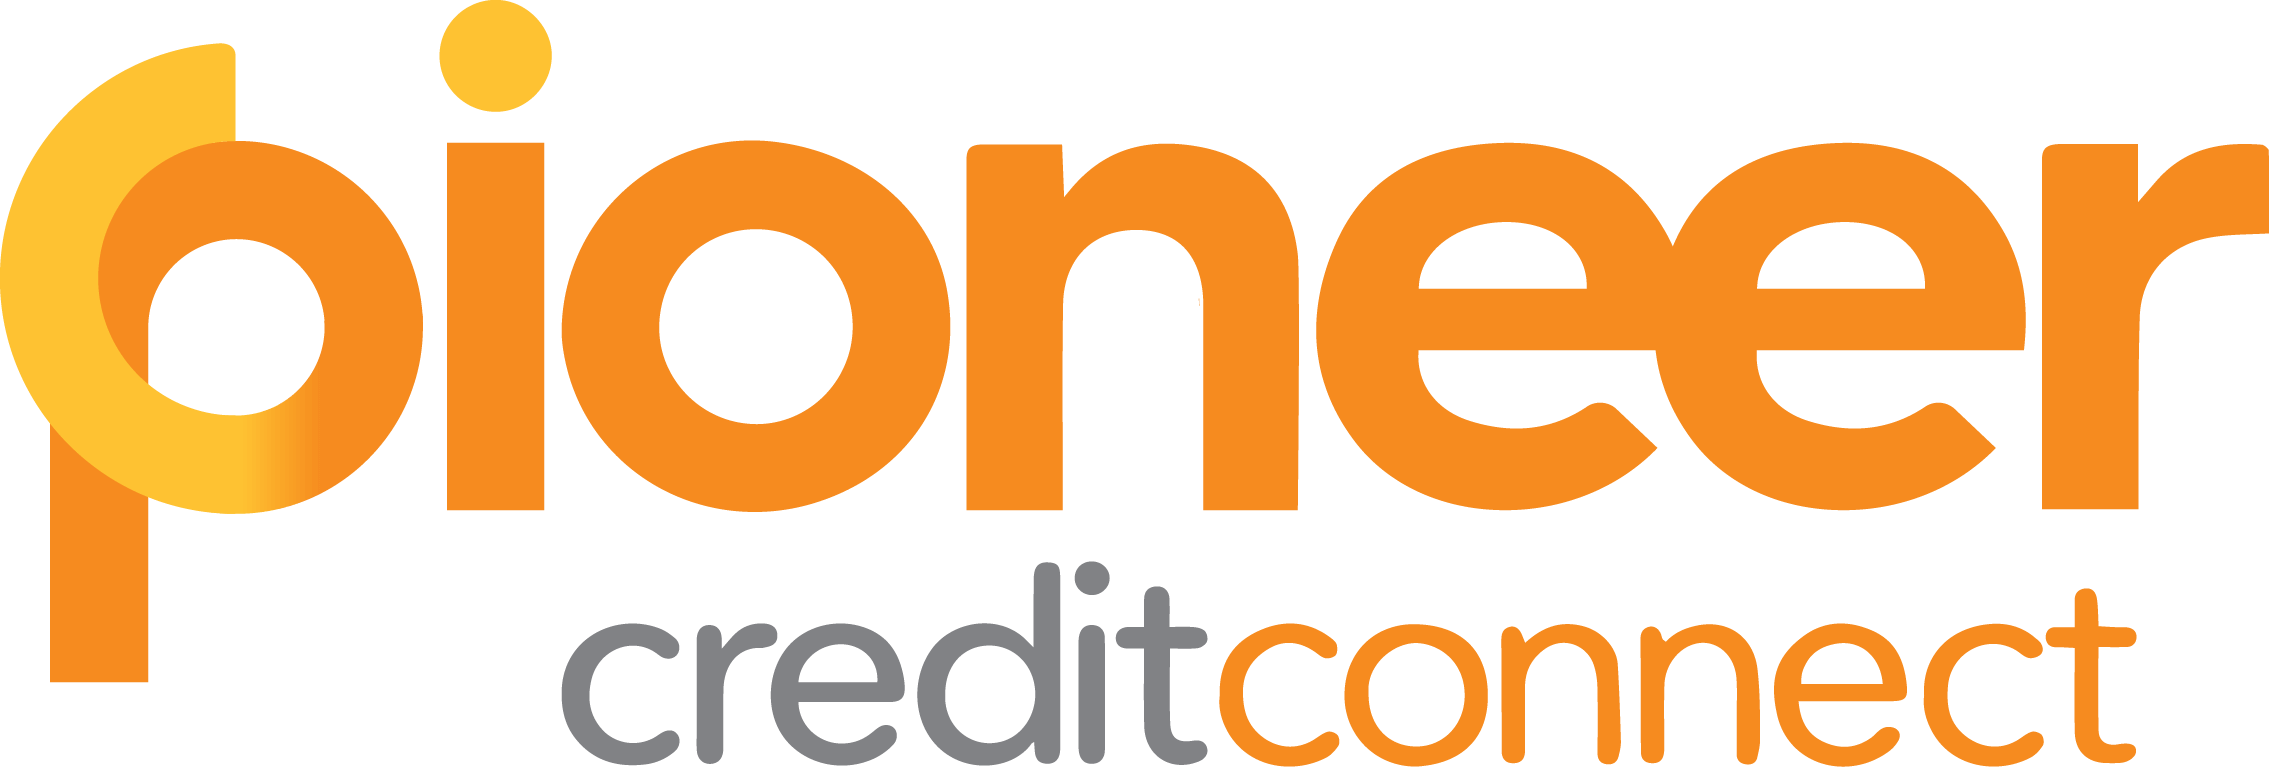 Pioneer Credit Ltd